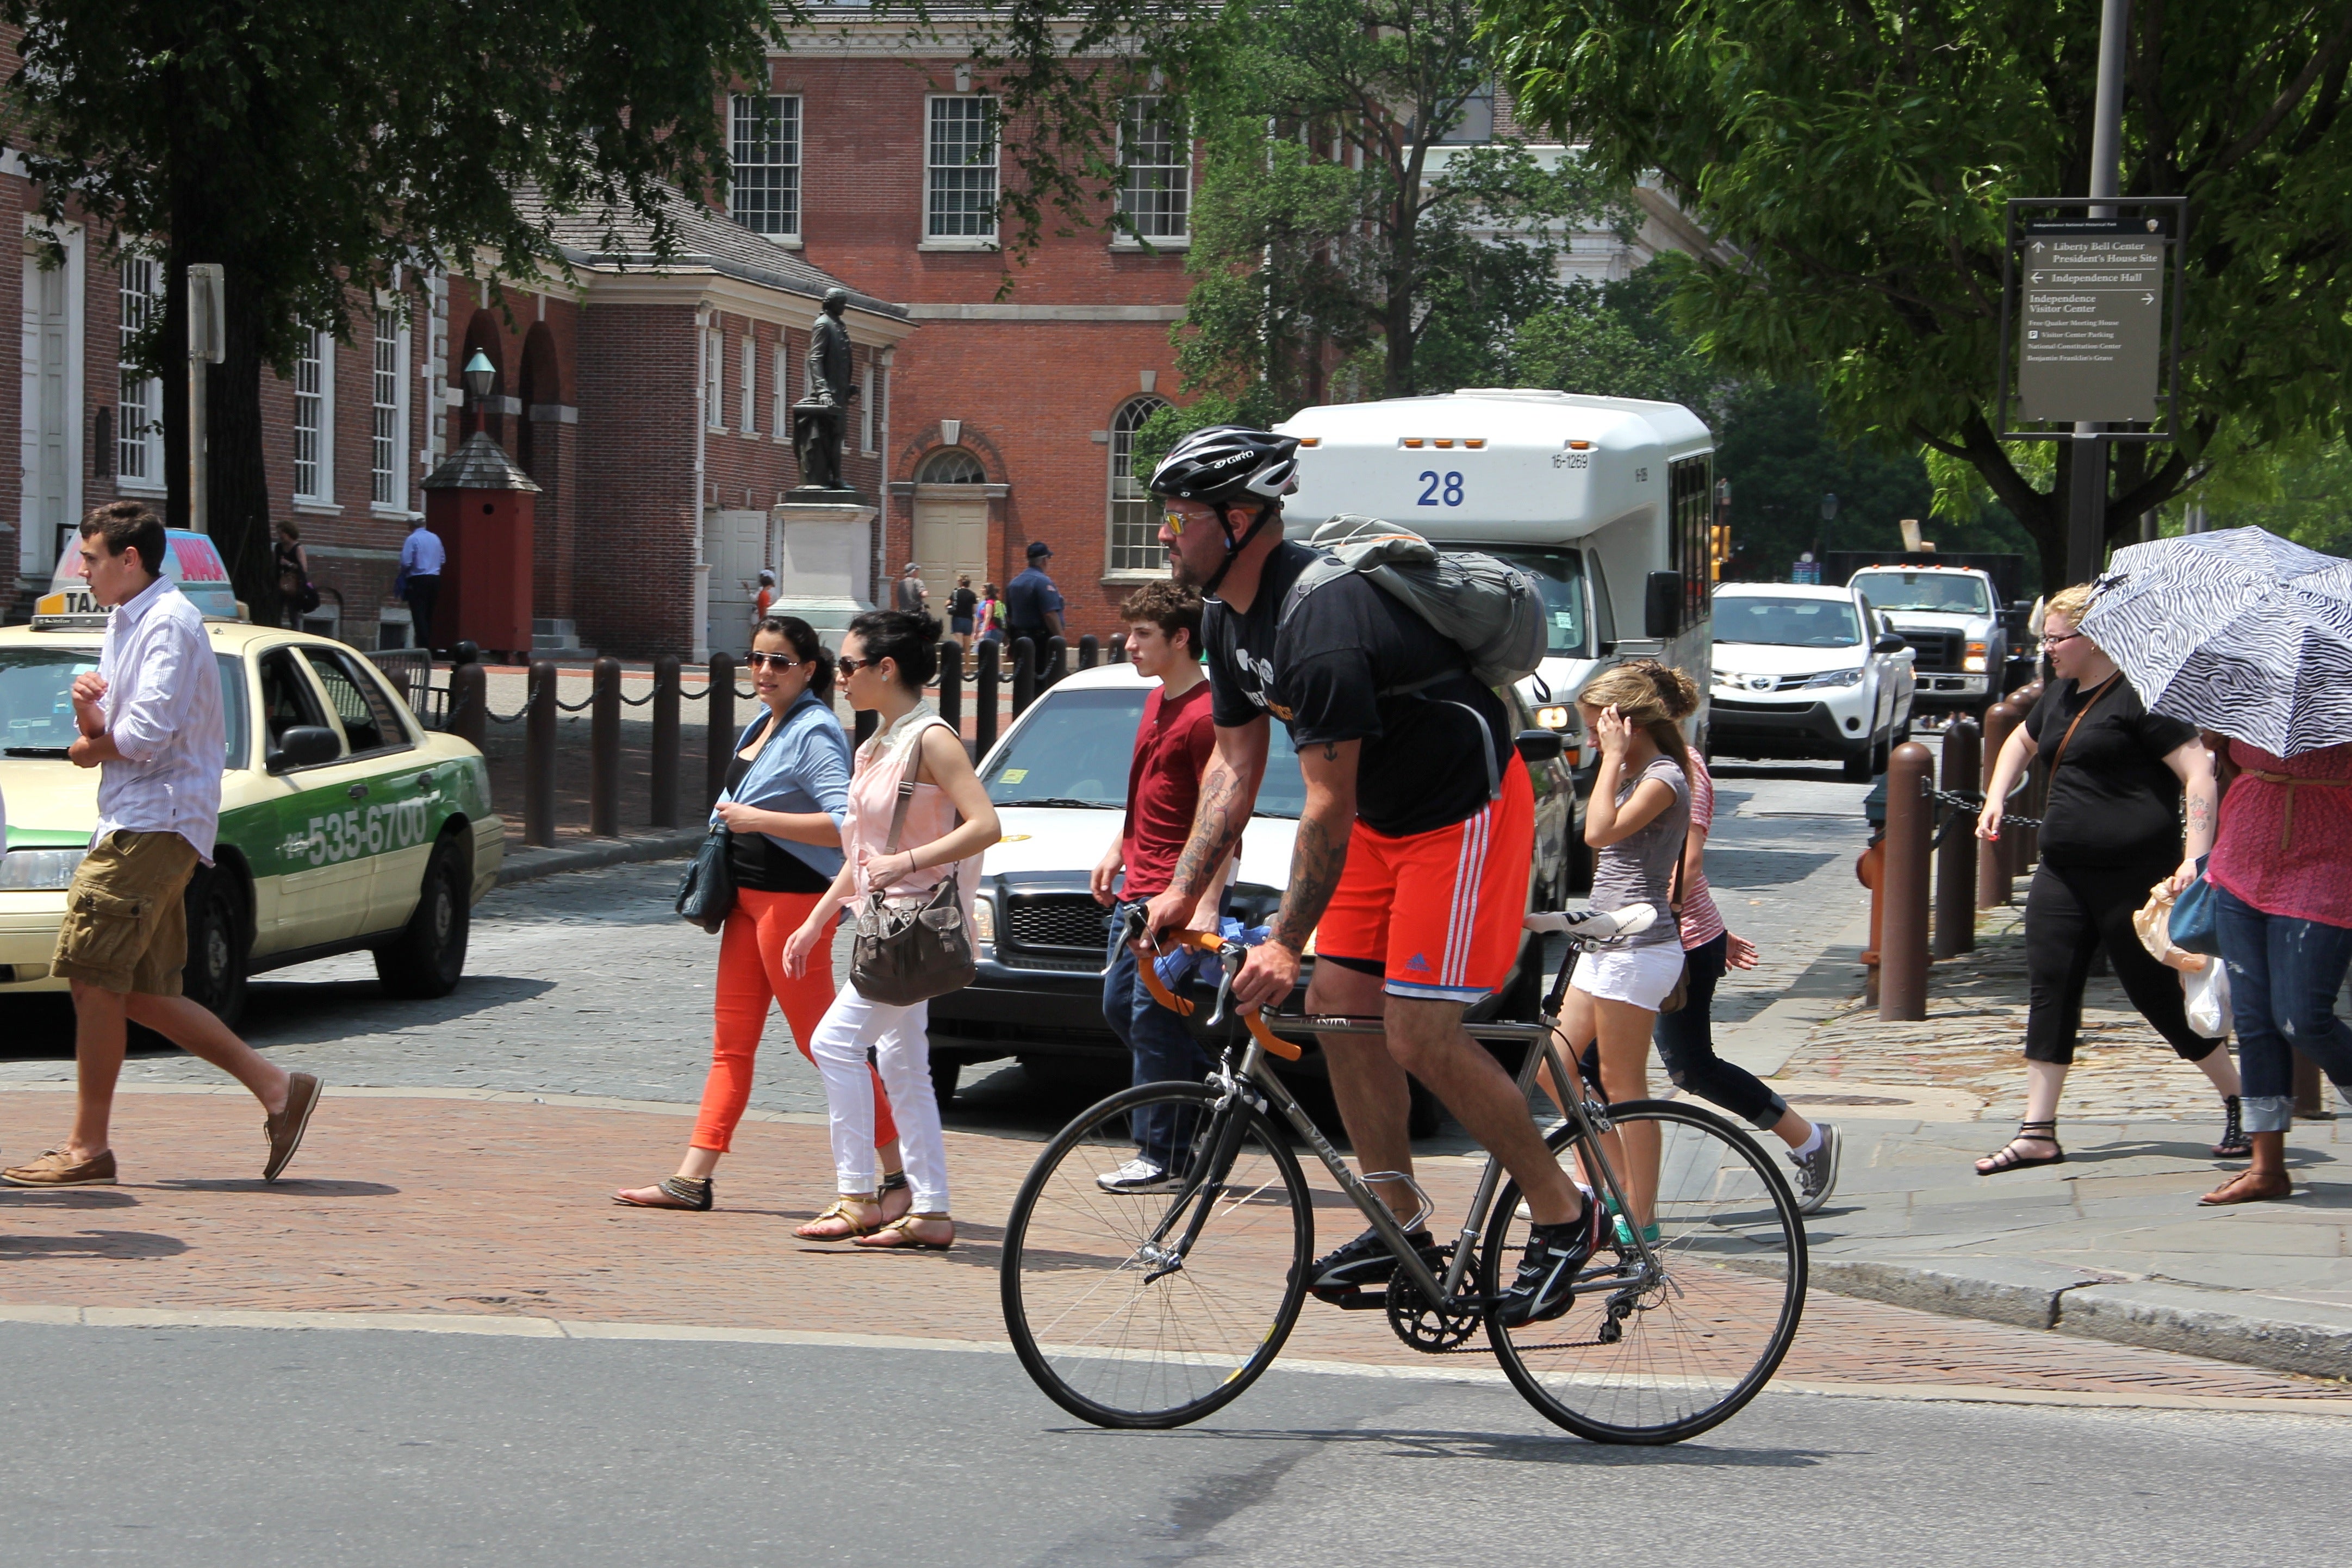  Cyclists and pedestrians cross the street in Philadelphia. (Emma Lee/Newsworks) 